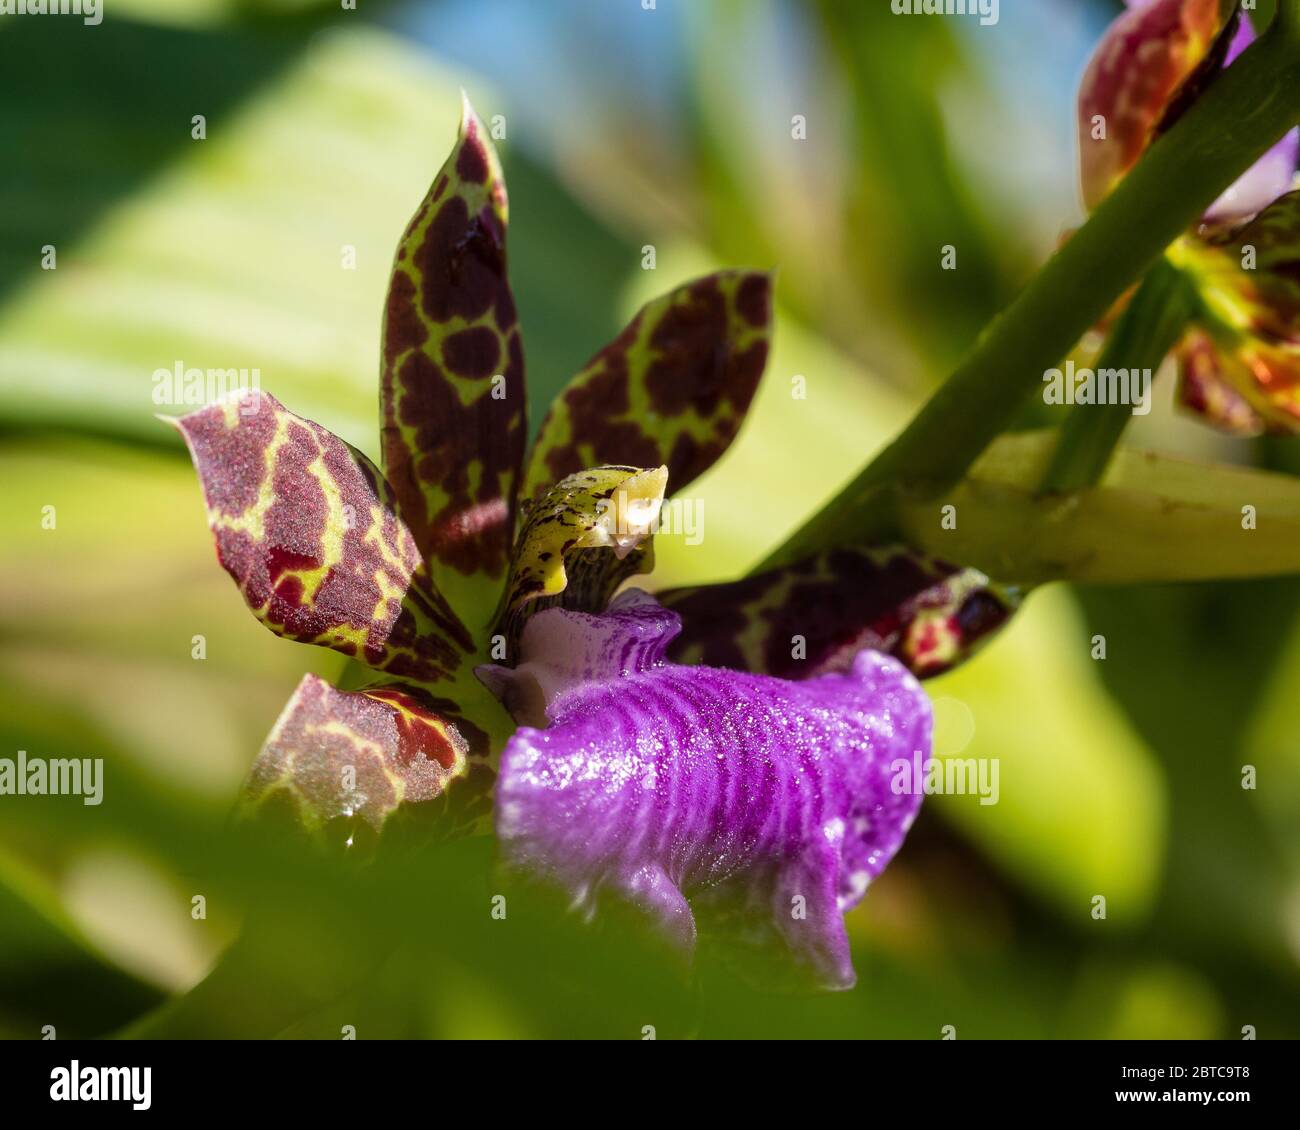 Giraffe like speckles of the purple Zygopetalum orchid Stock Photo